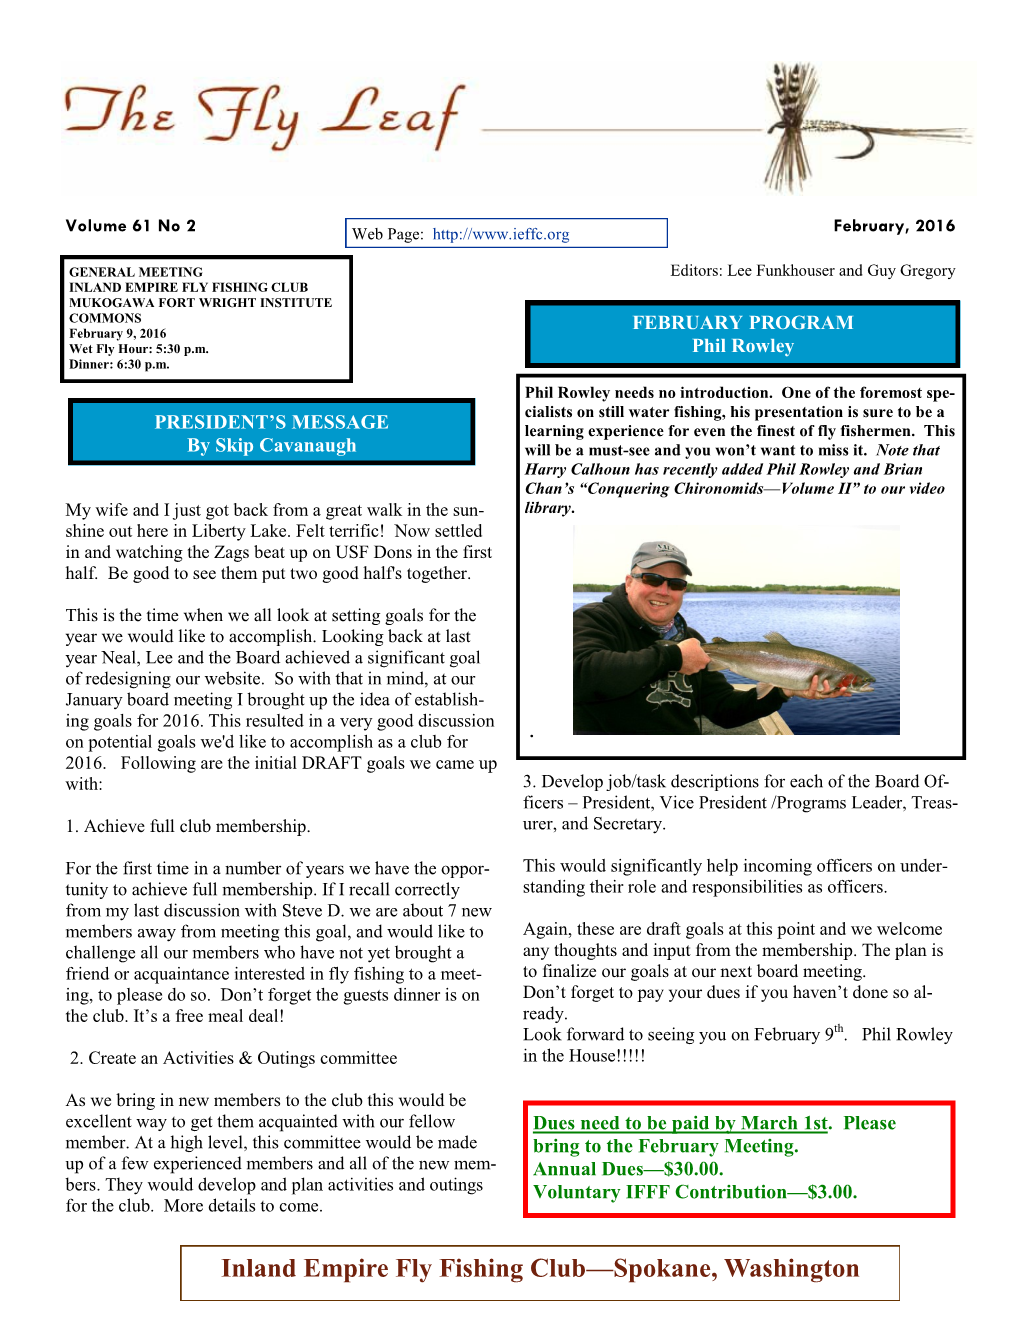 Inland Empire Fly Fishing Club—Spokane, Washington NEAL BEECHINOR PAST PRESIDENT